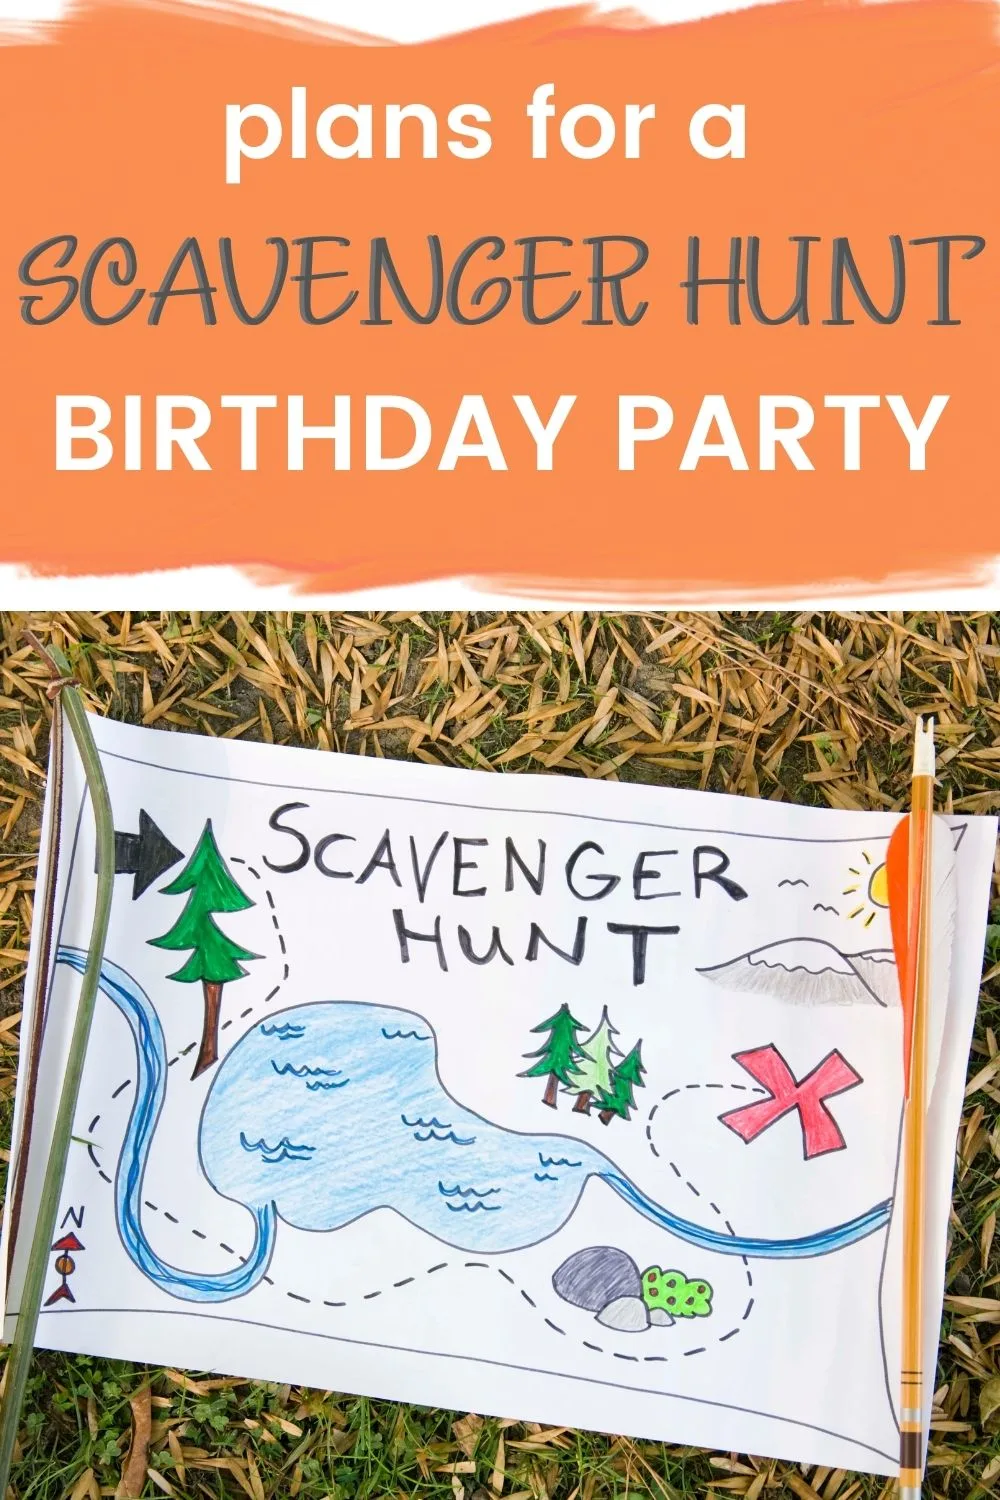 Scavenger hunt birthday party